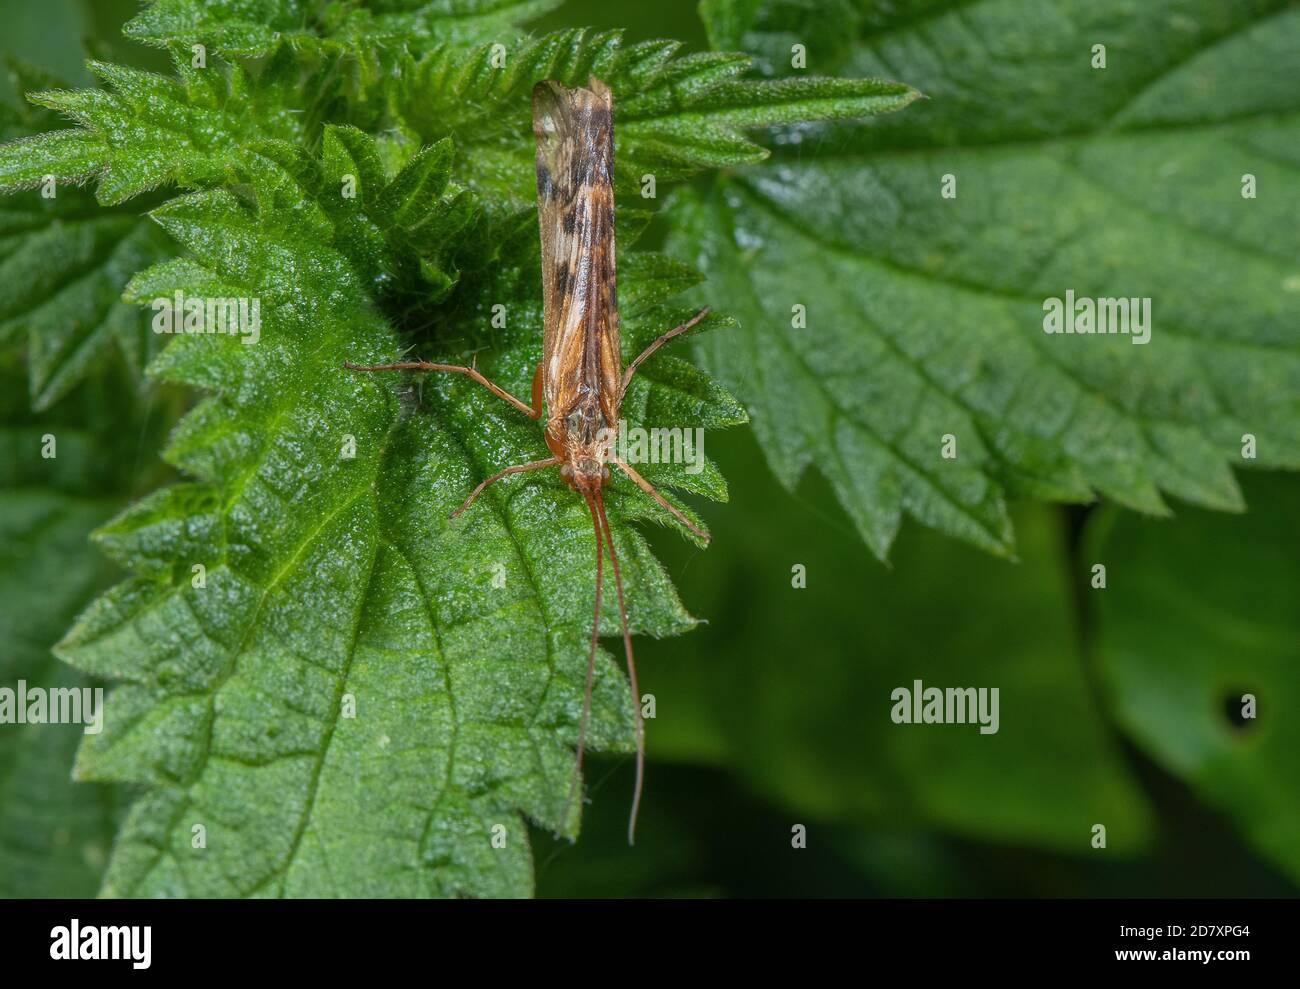 A caddisfly, Cinnamon Sedge, Limnephilus lunatus, perched on riverside vegetation, Stour Valley, Dorset. Stock Photo